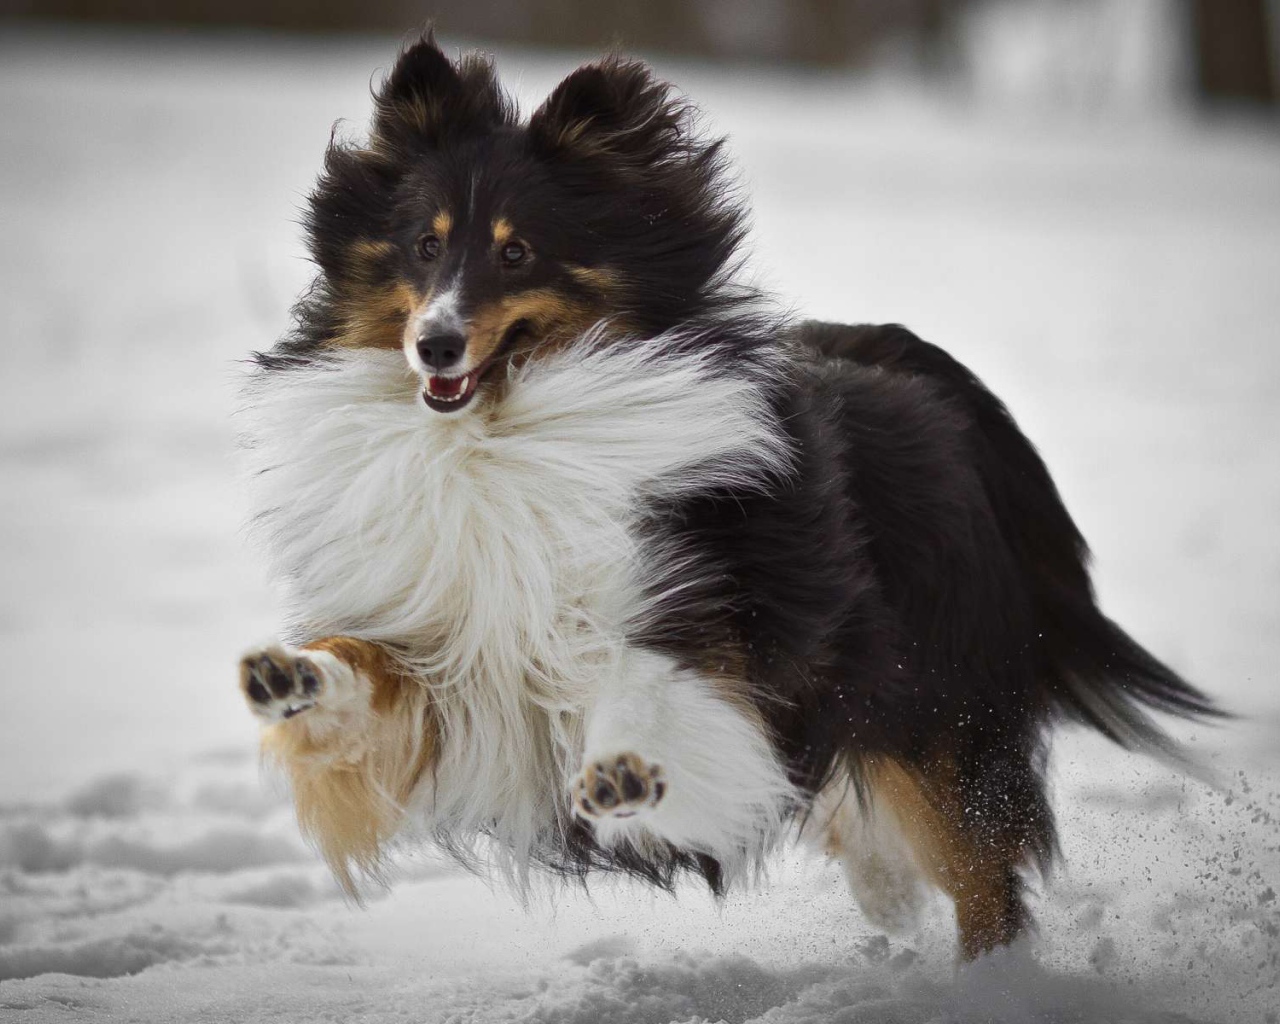 Собака колли бежит по снегу